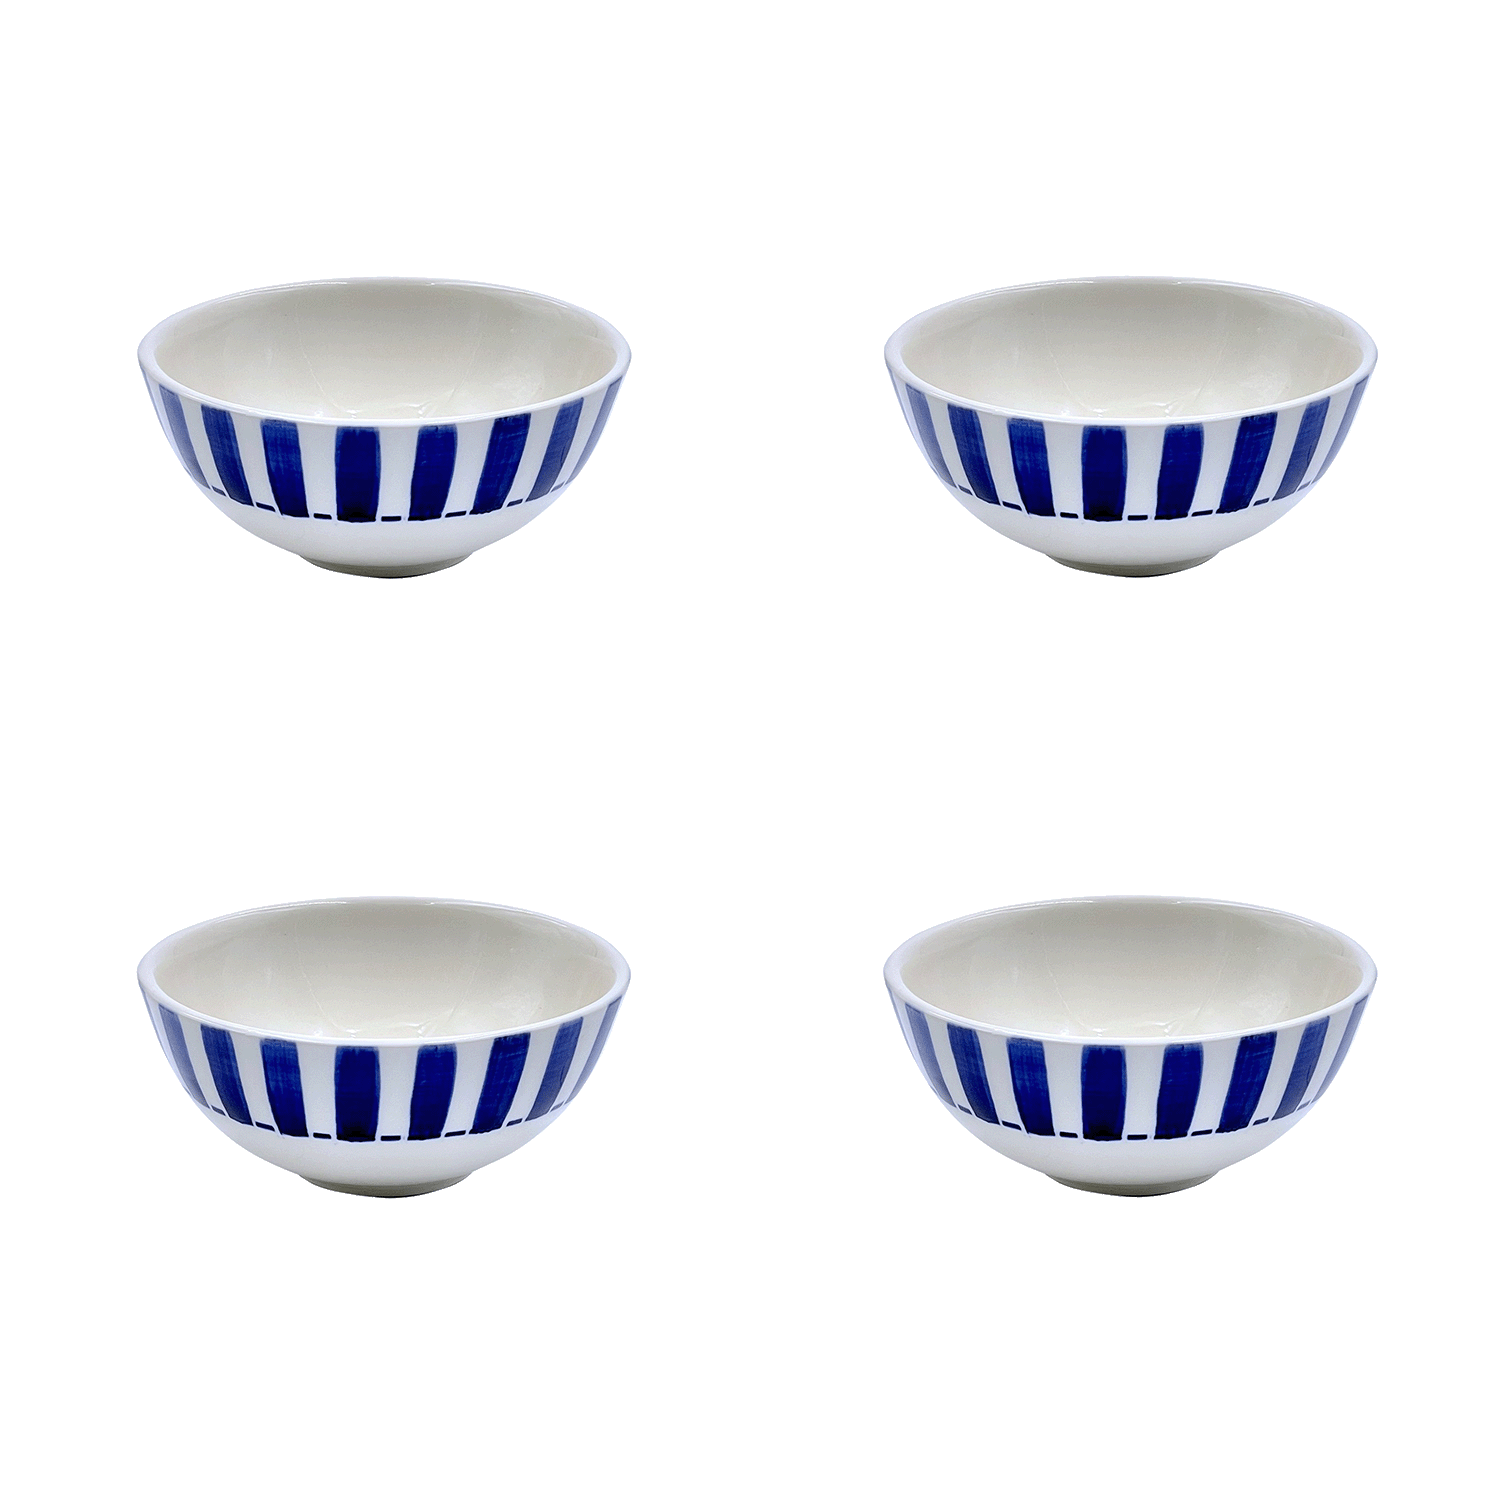 Small Navy Blue Stripes Bowls (Set of 4)